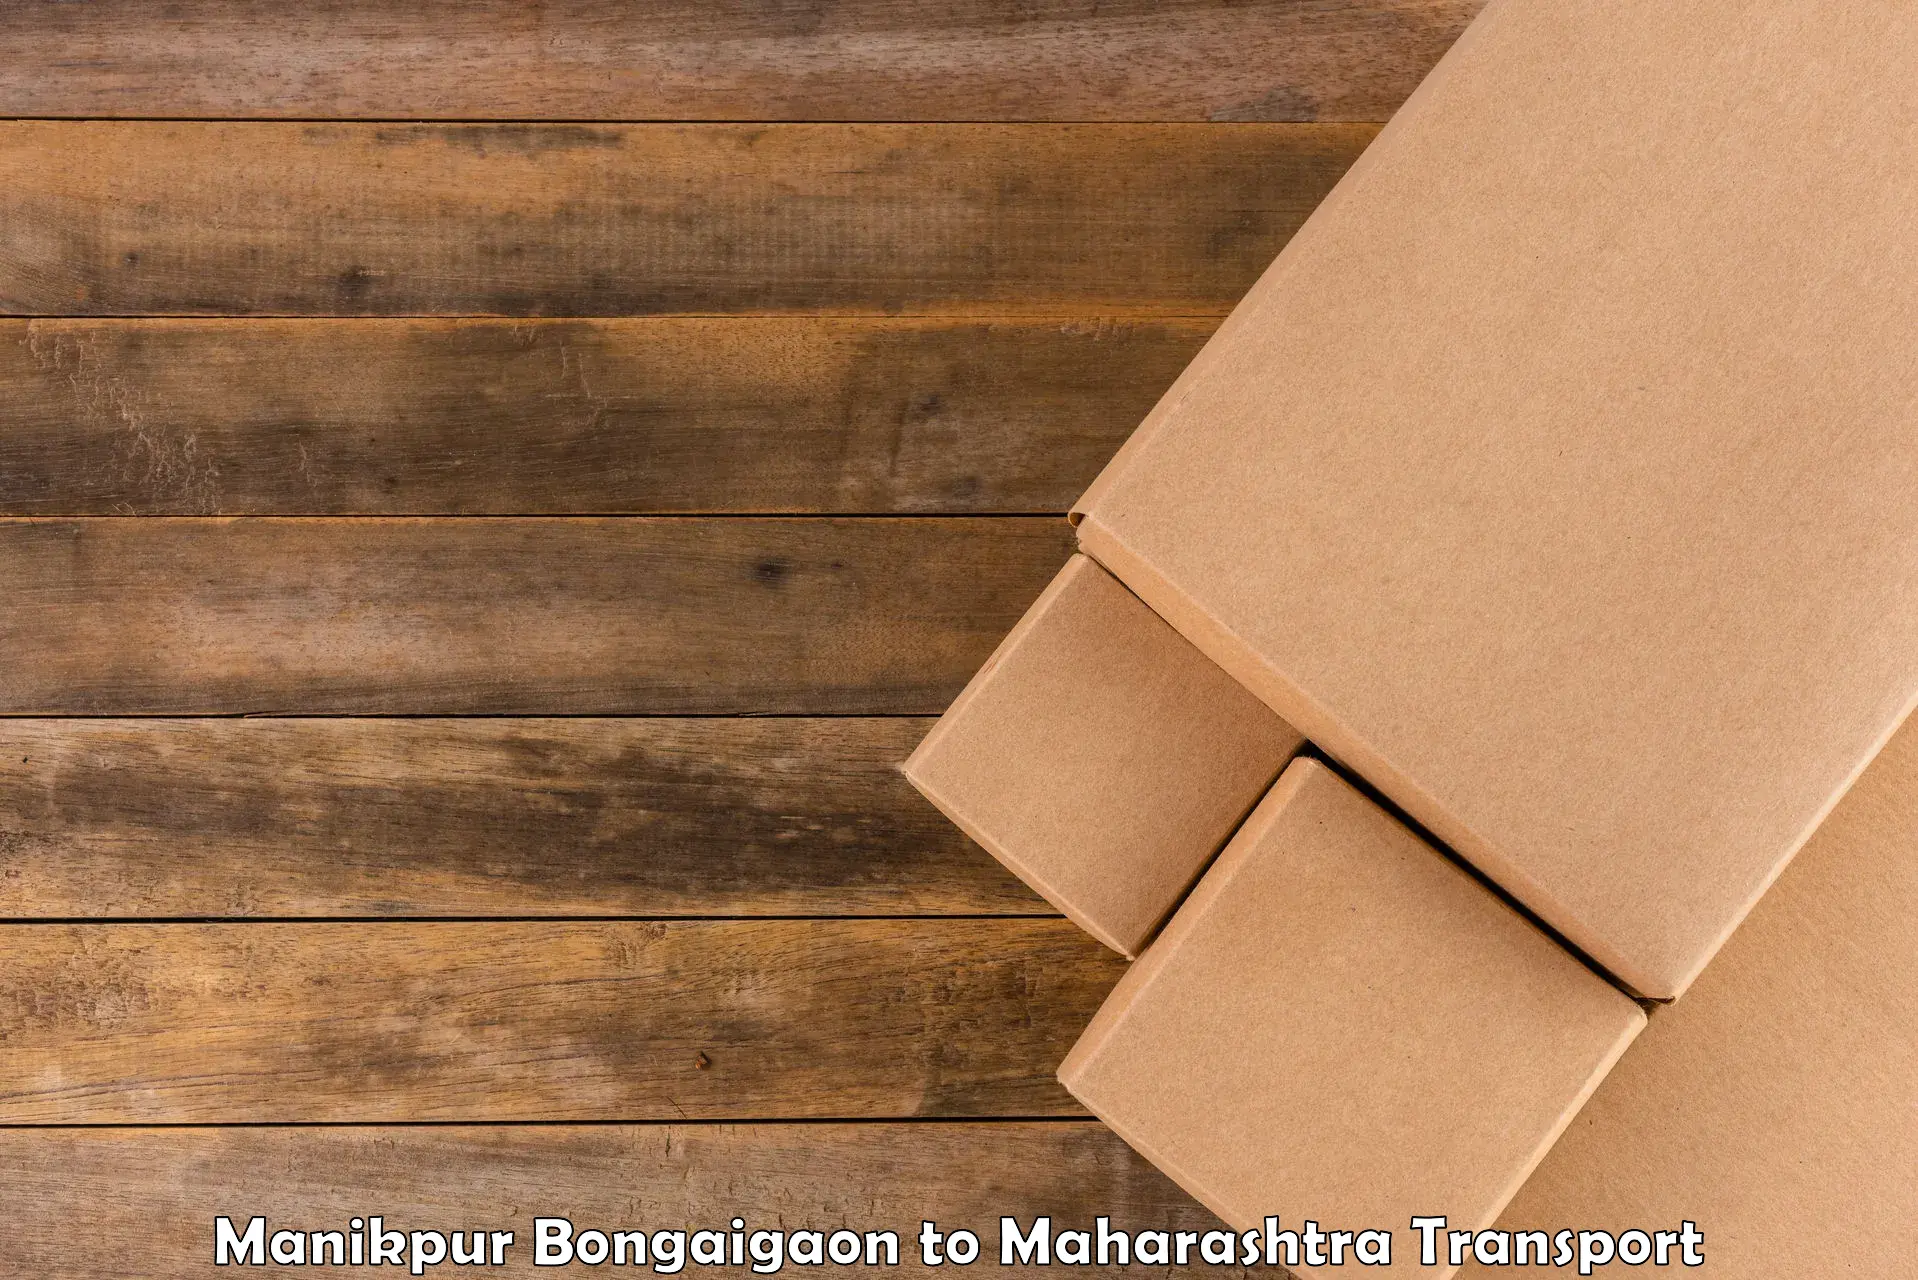 Sending bike to another city Manikpur Bongaigaon to Maharashtra